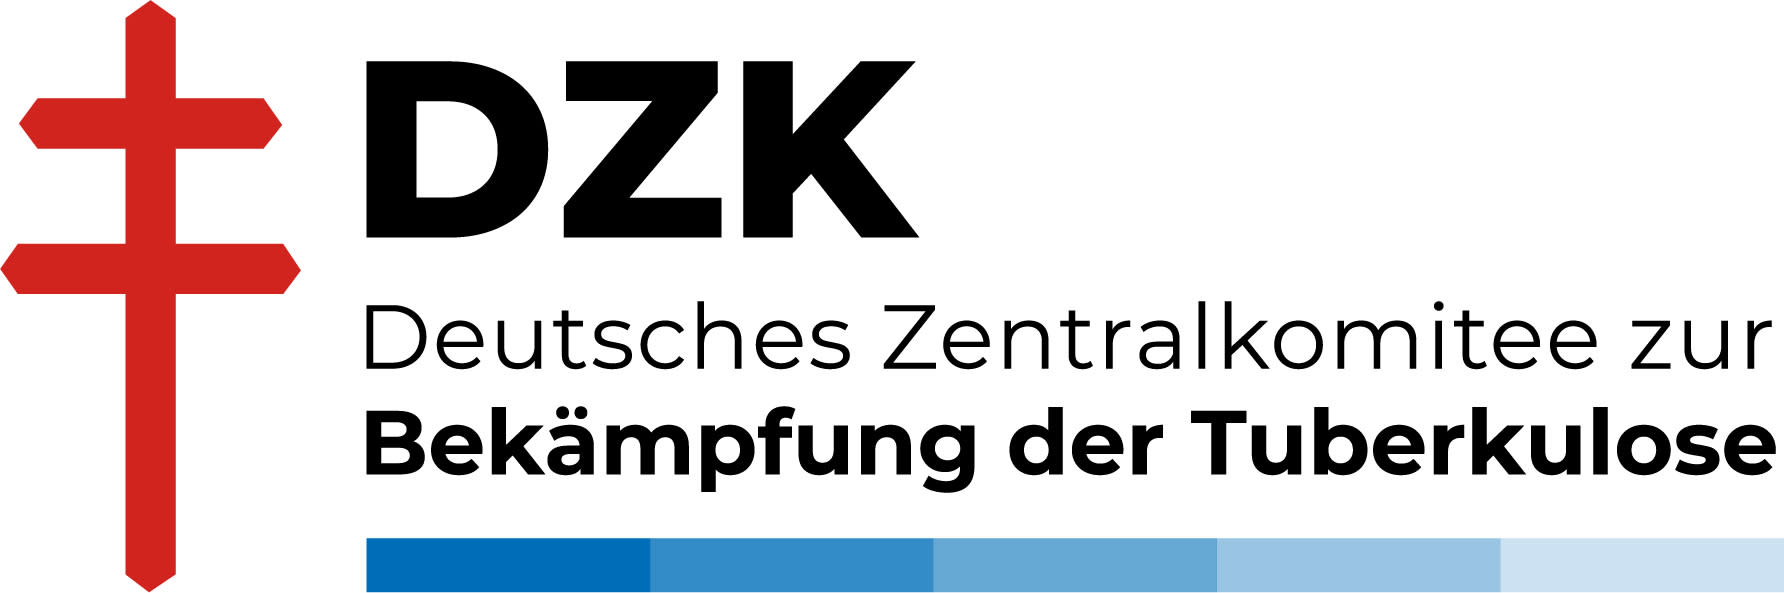 DZK Logo